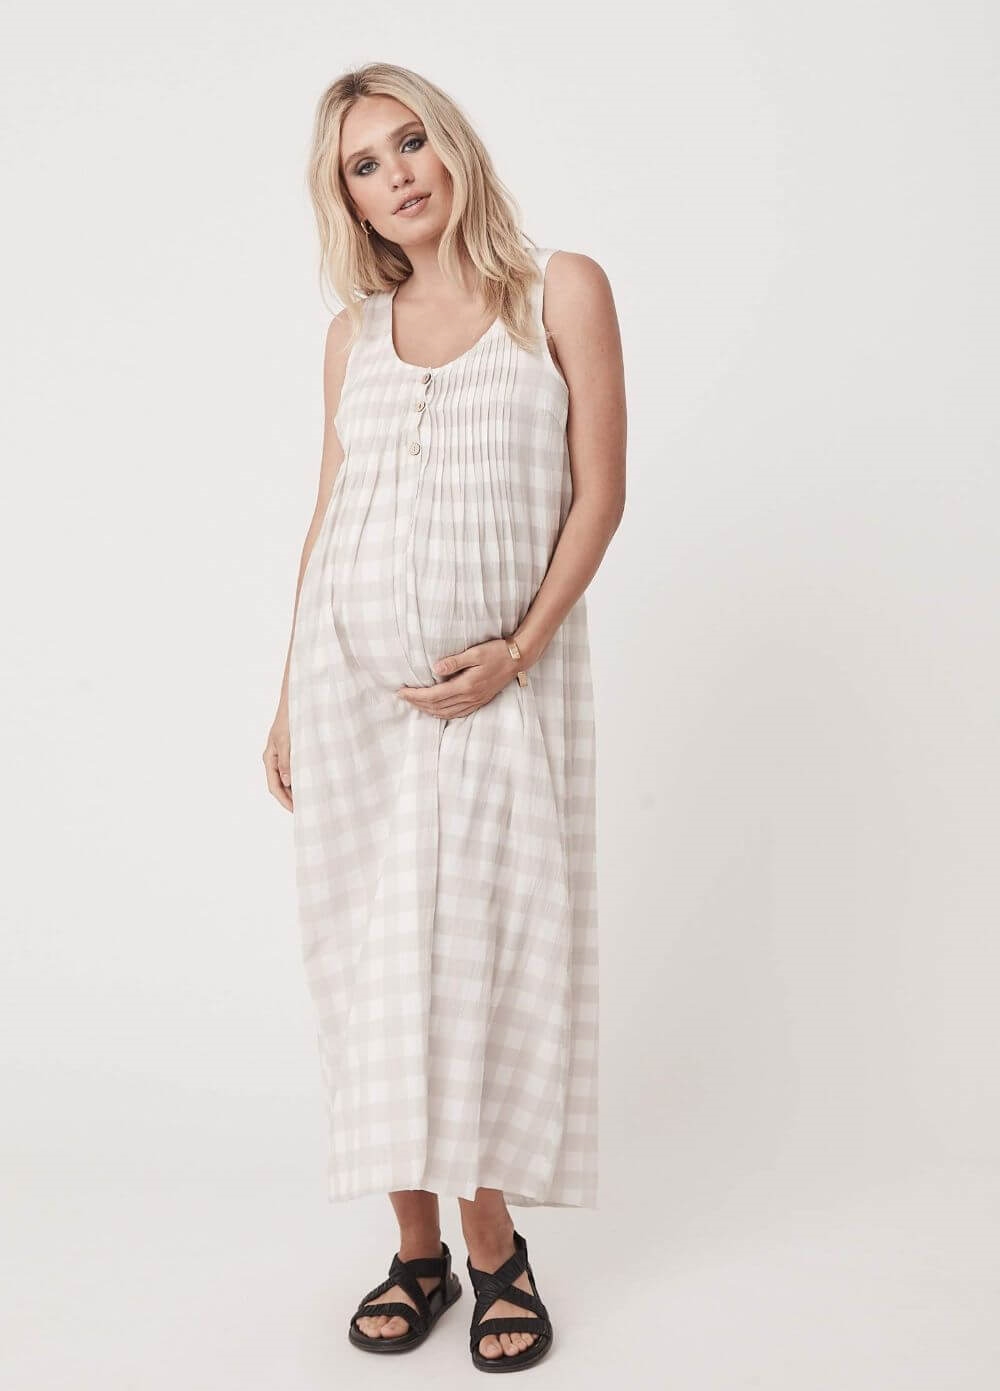 Legoe - Arabella Maternity Maxi Dress in Taupe/White Check